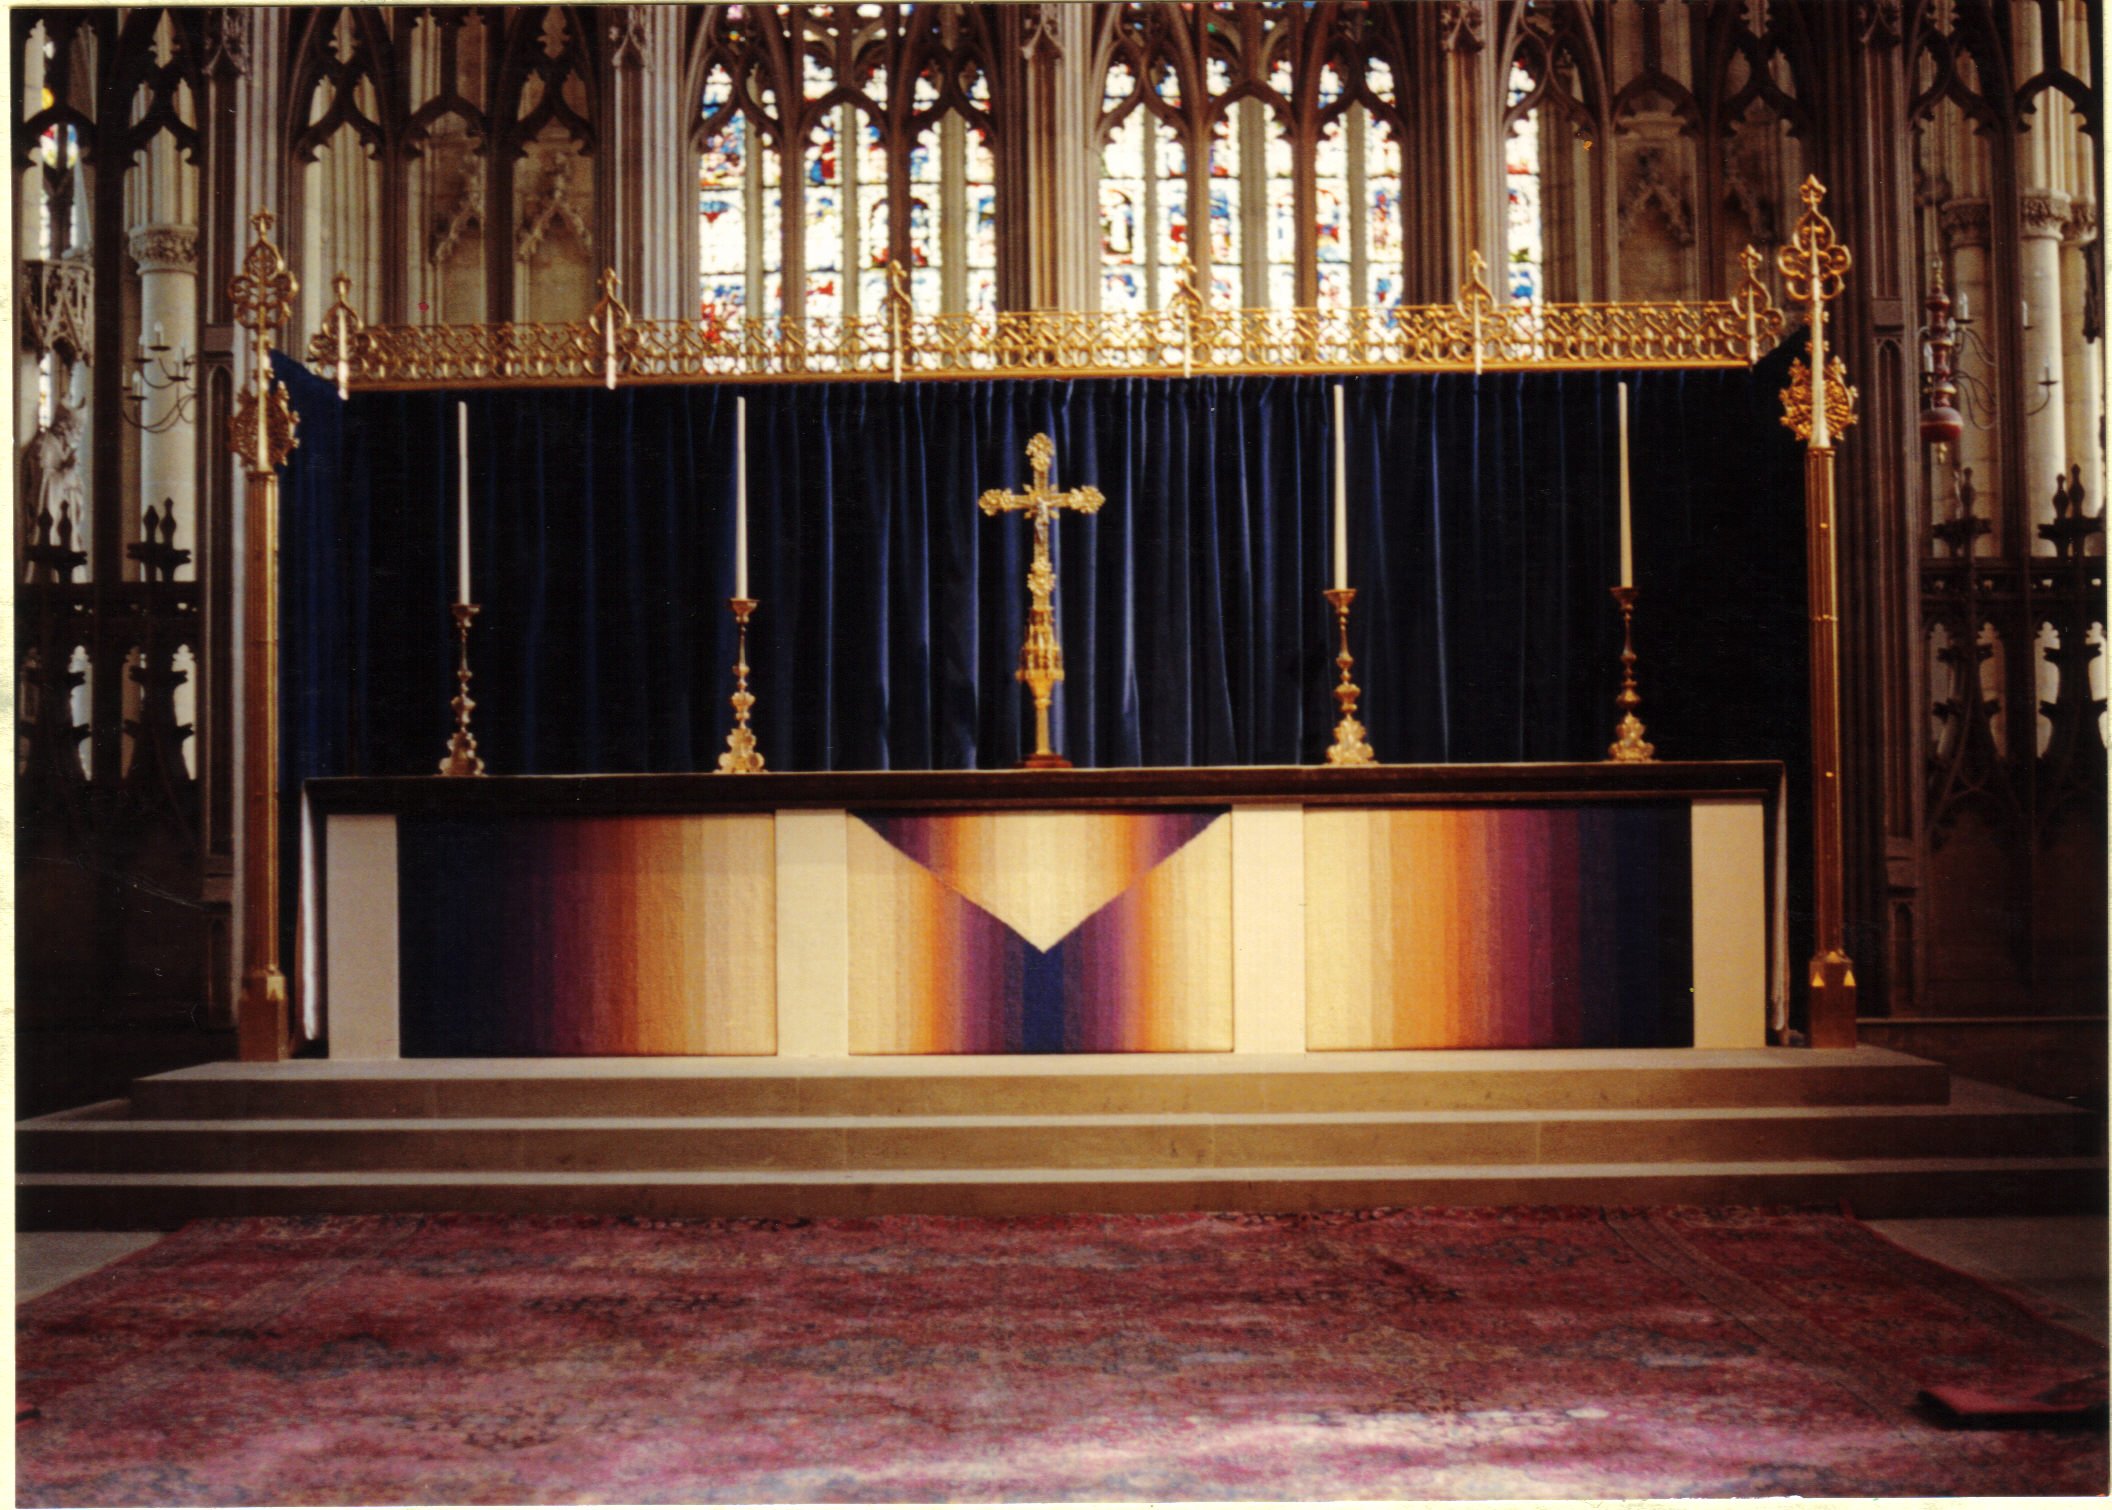 Lenten Altar Frontal in situ